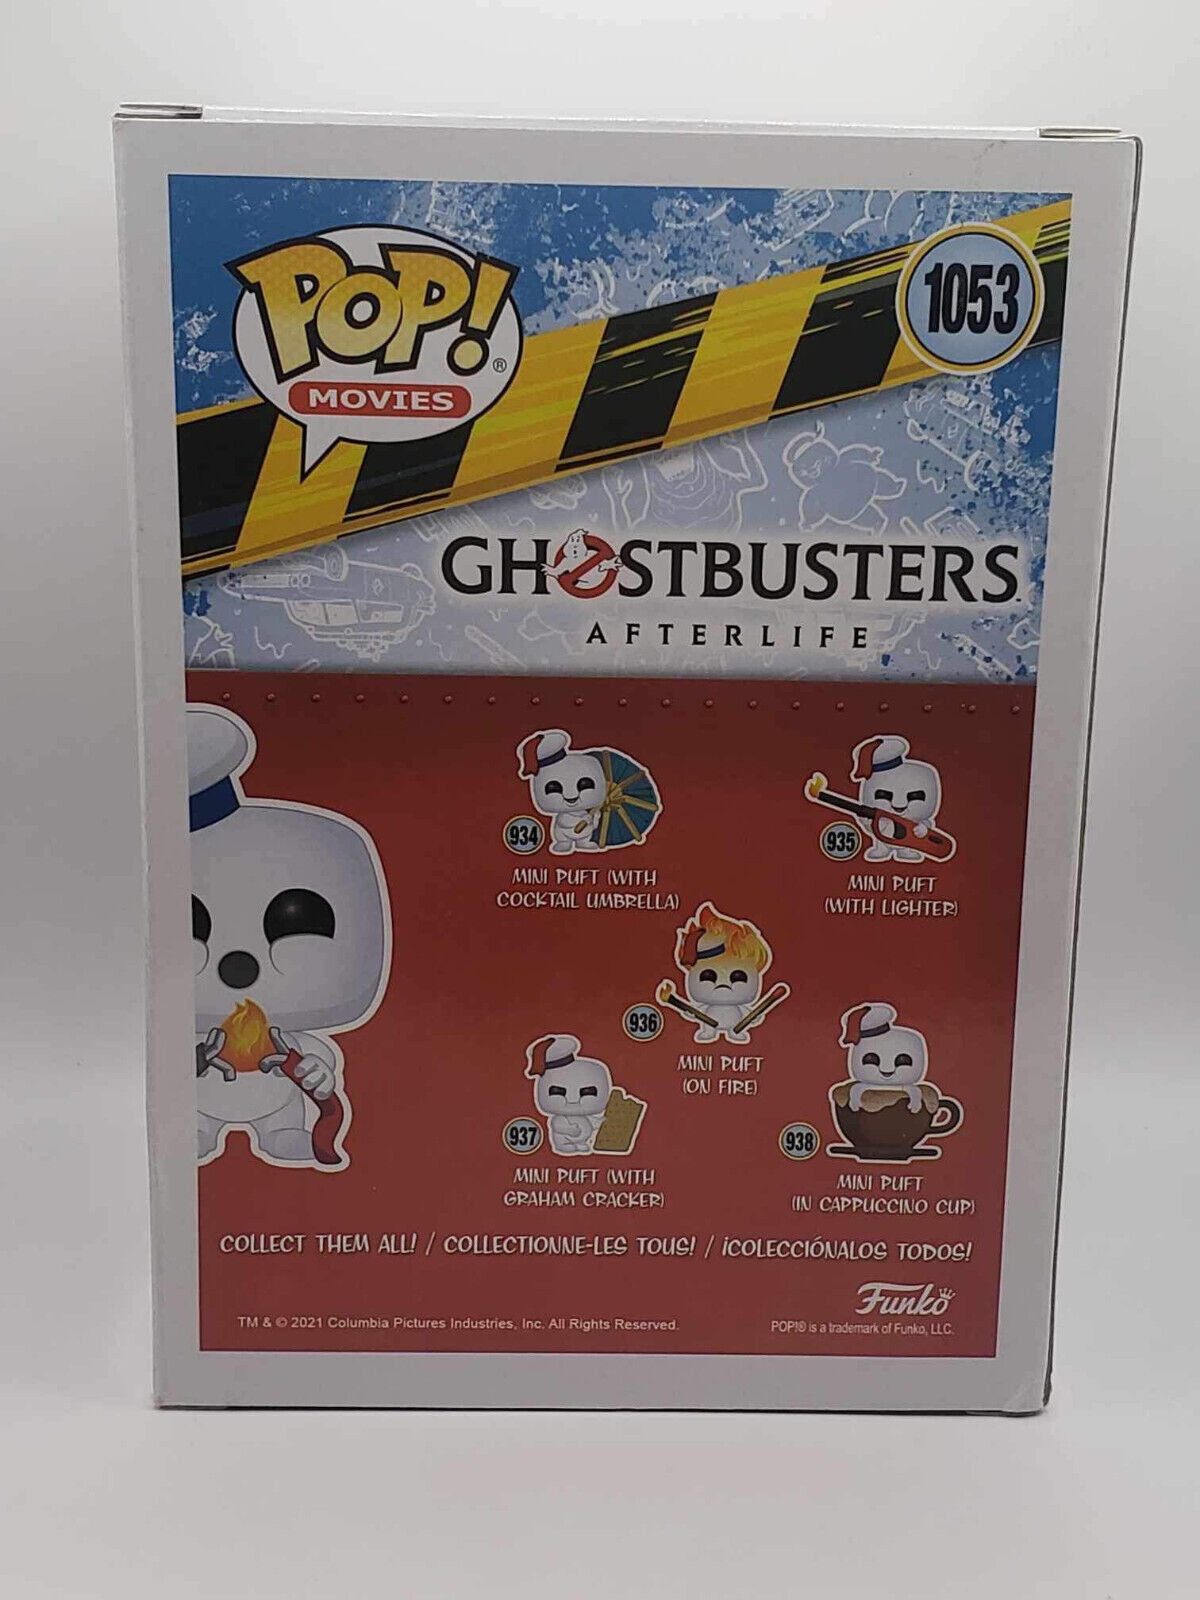 Funko Pop! Movies 1053 Mini Puft (Zapped) Ghostbusters